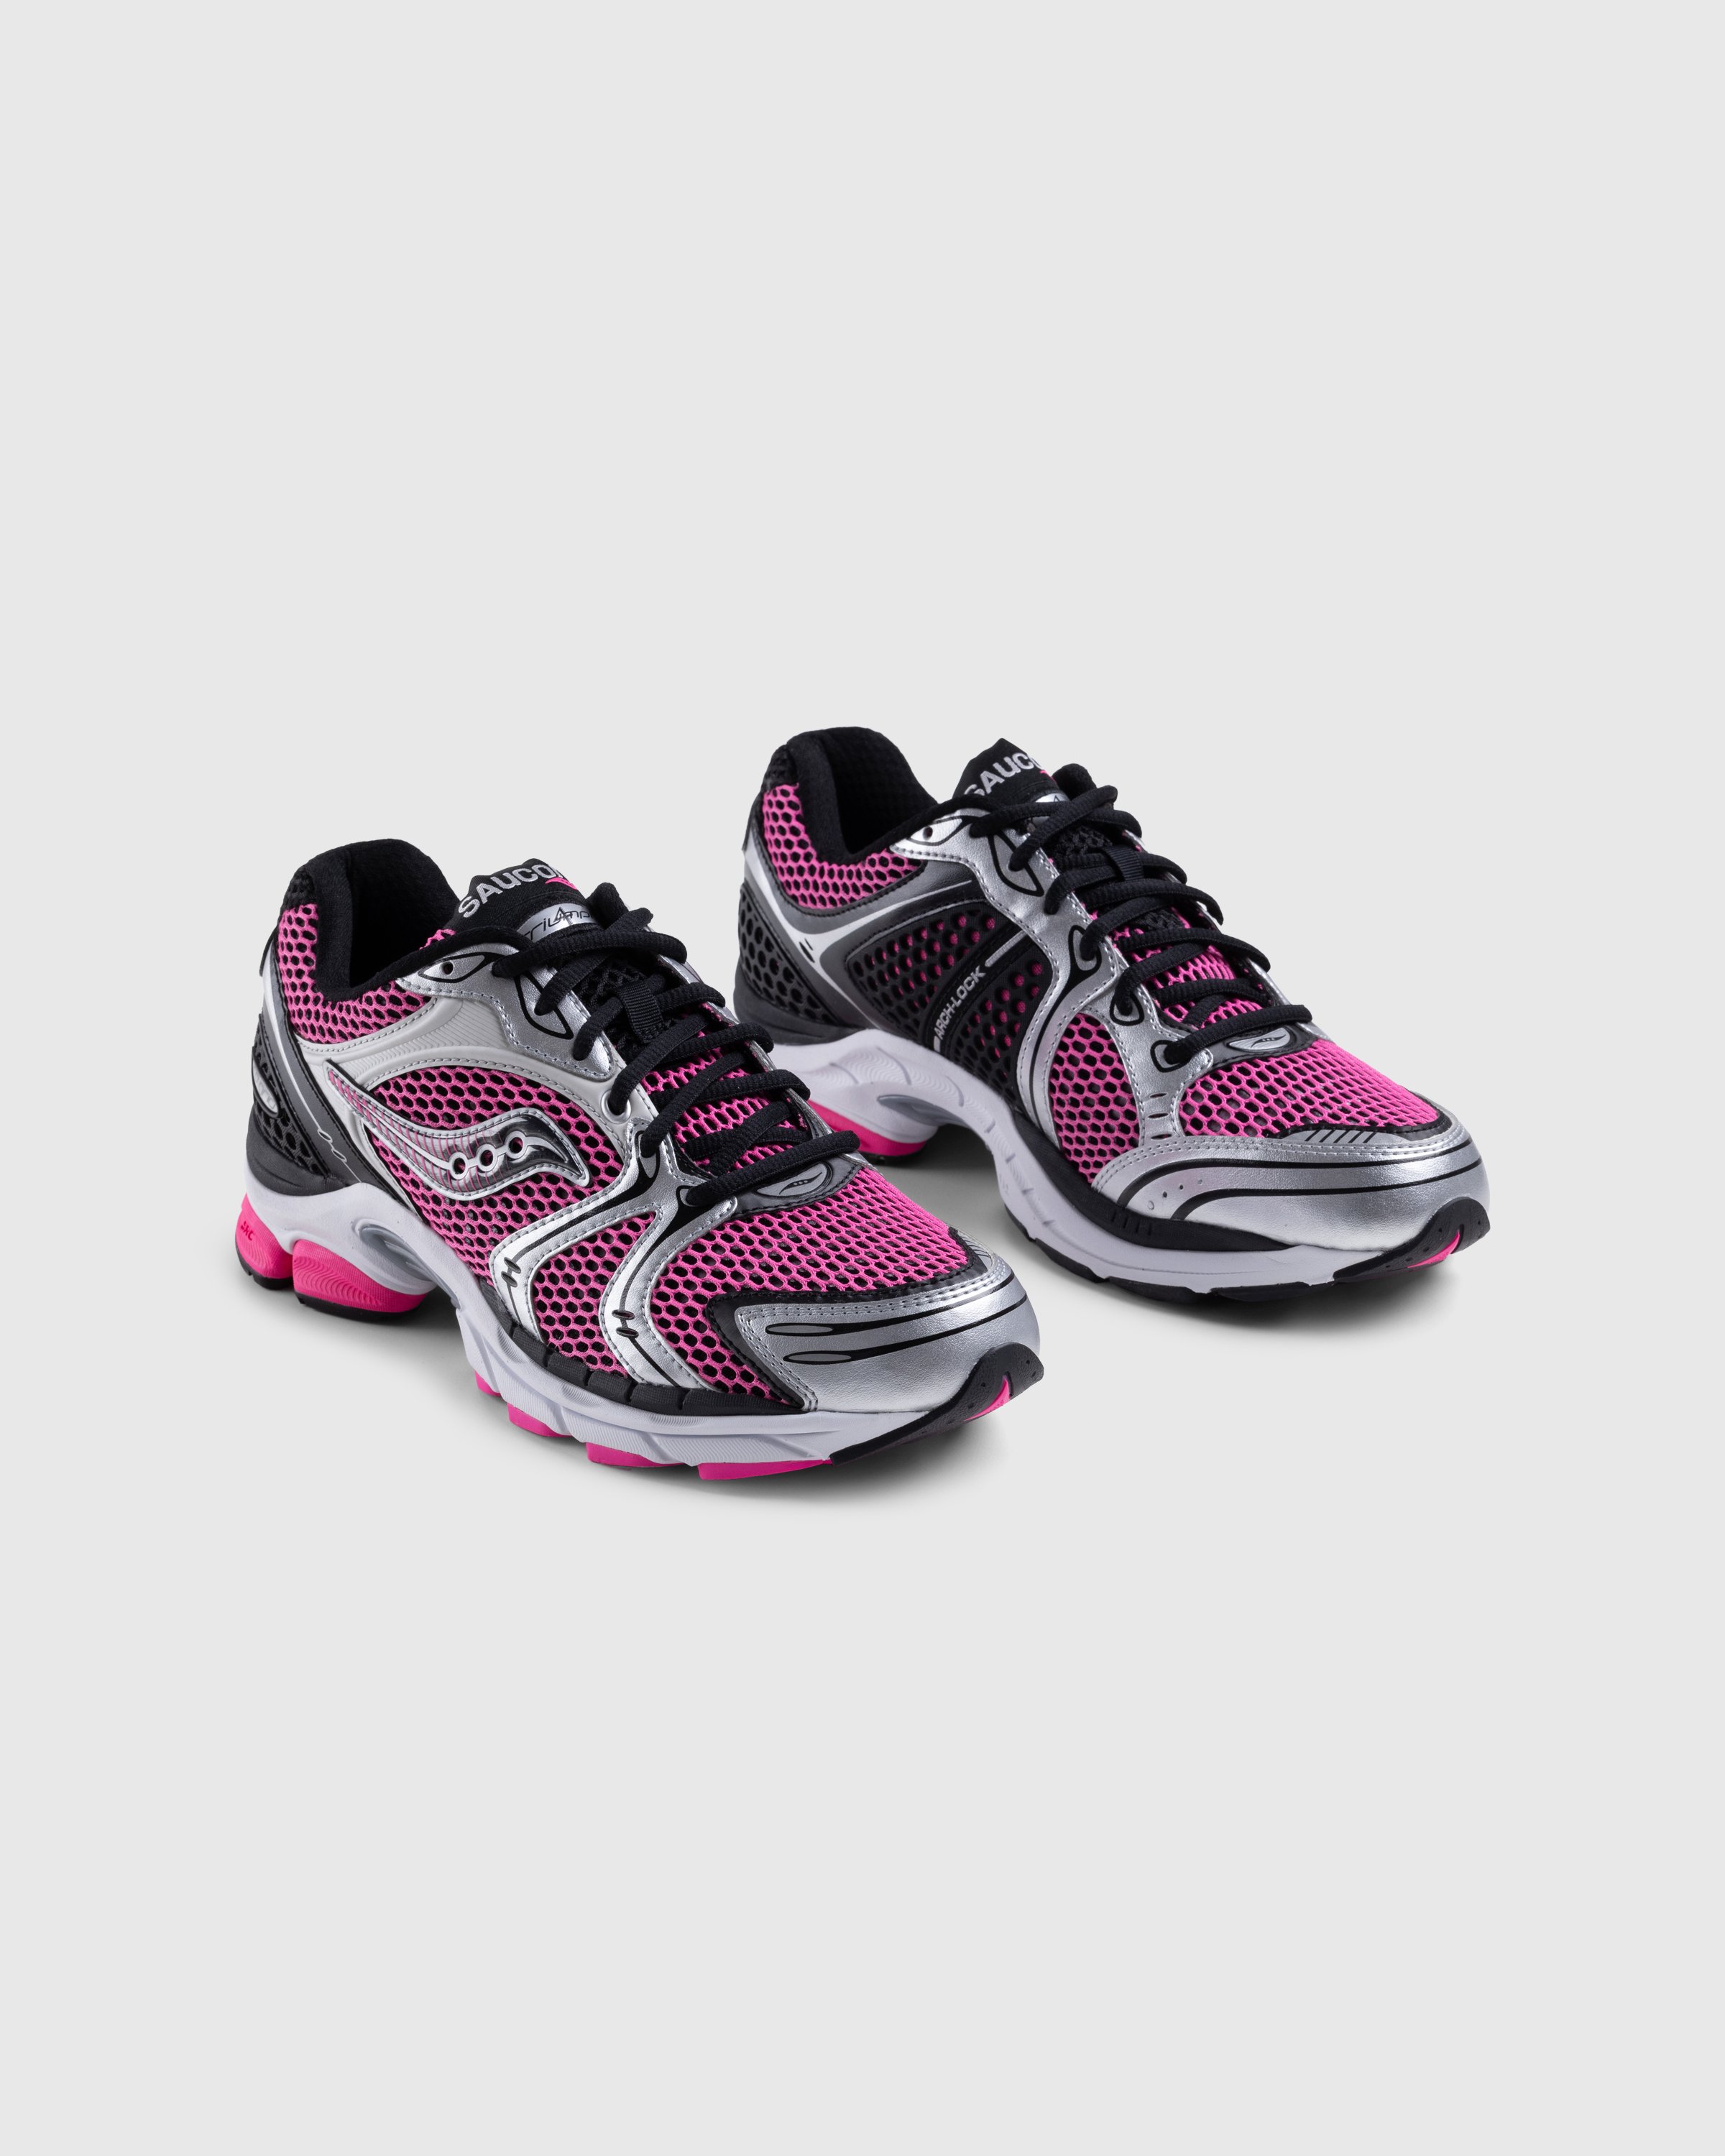 Saucony - ProGrid Triumph 4 Pink/Silver - Footwear - Multi - Image 3